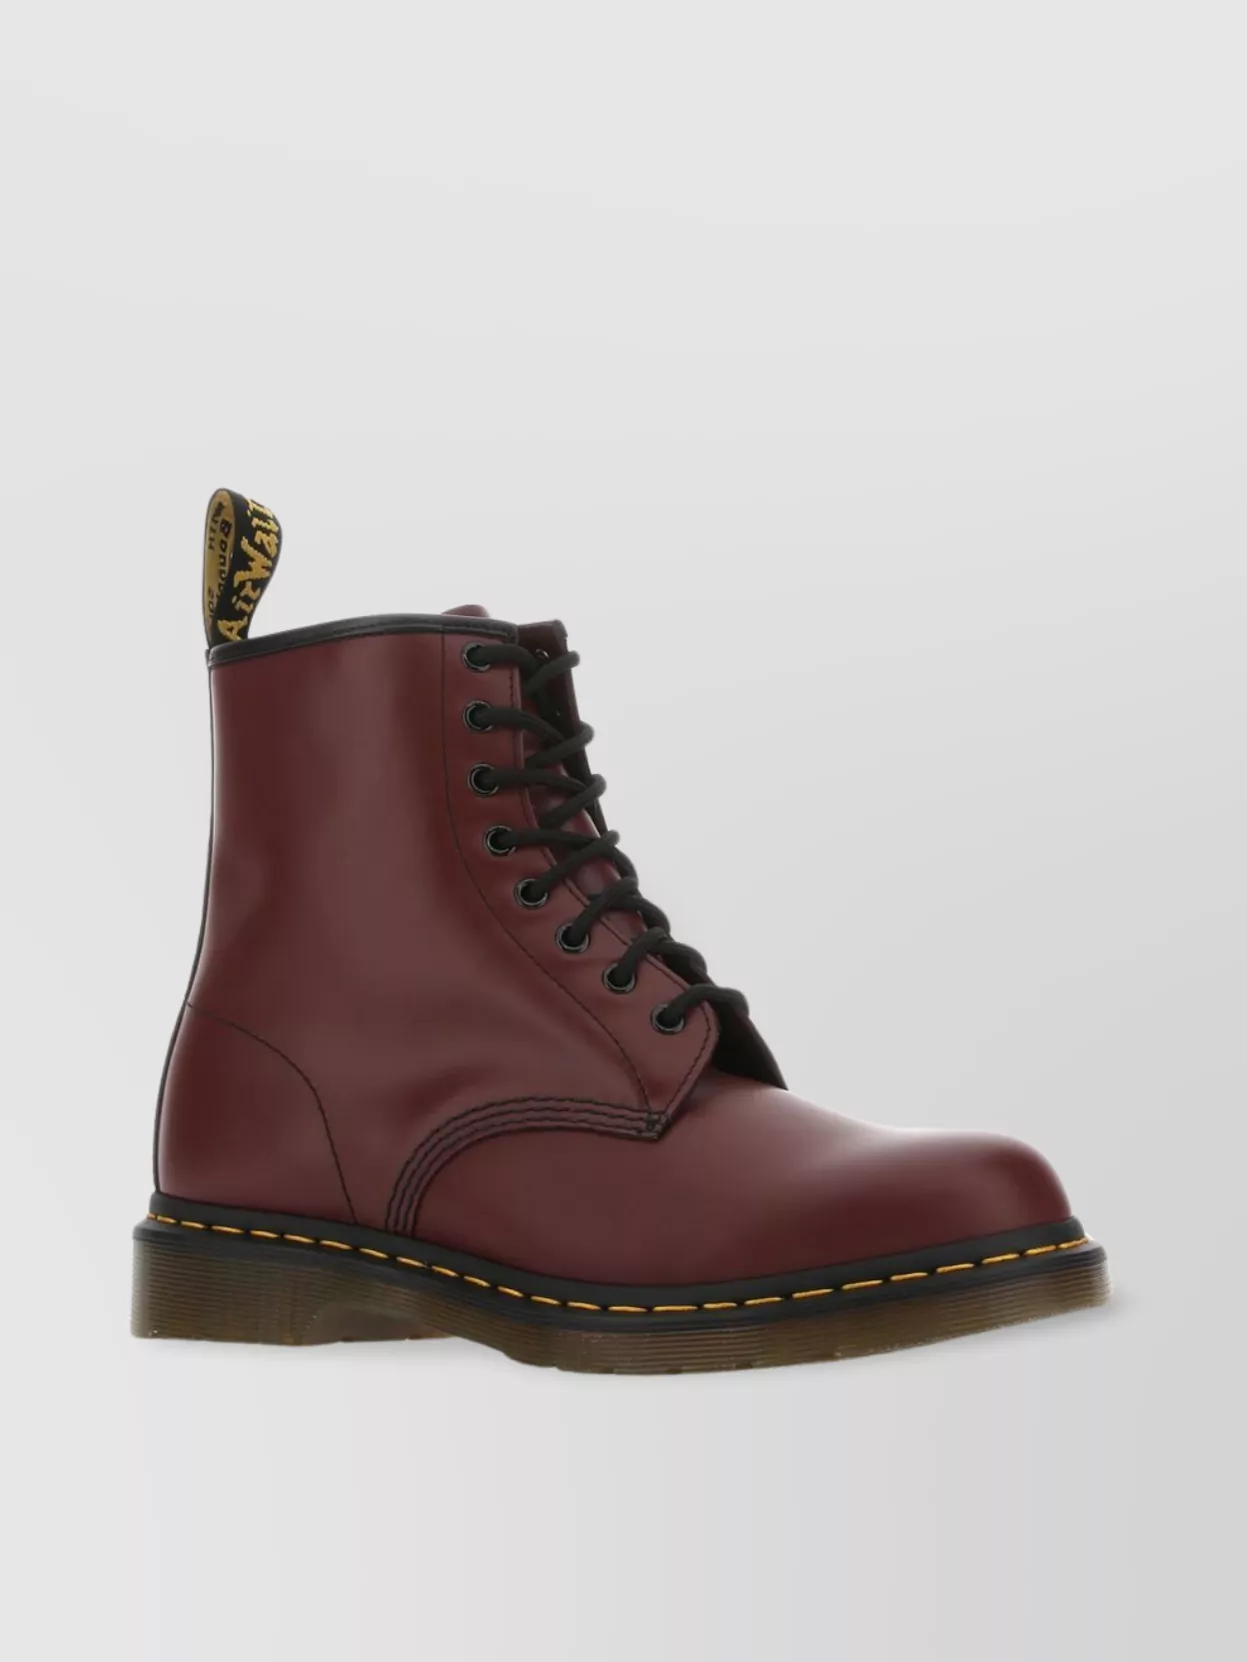 Shop Dr. Martens' Leather Ankle Boots 1460